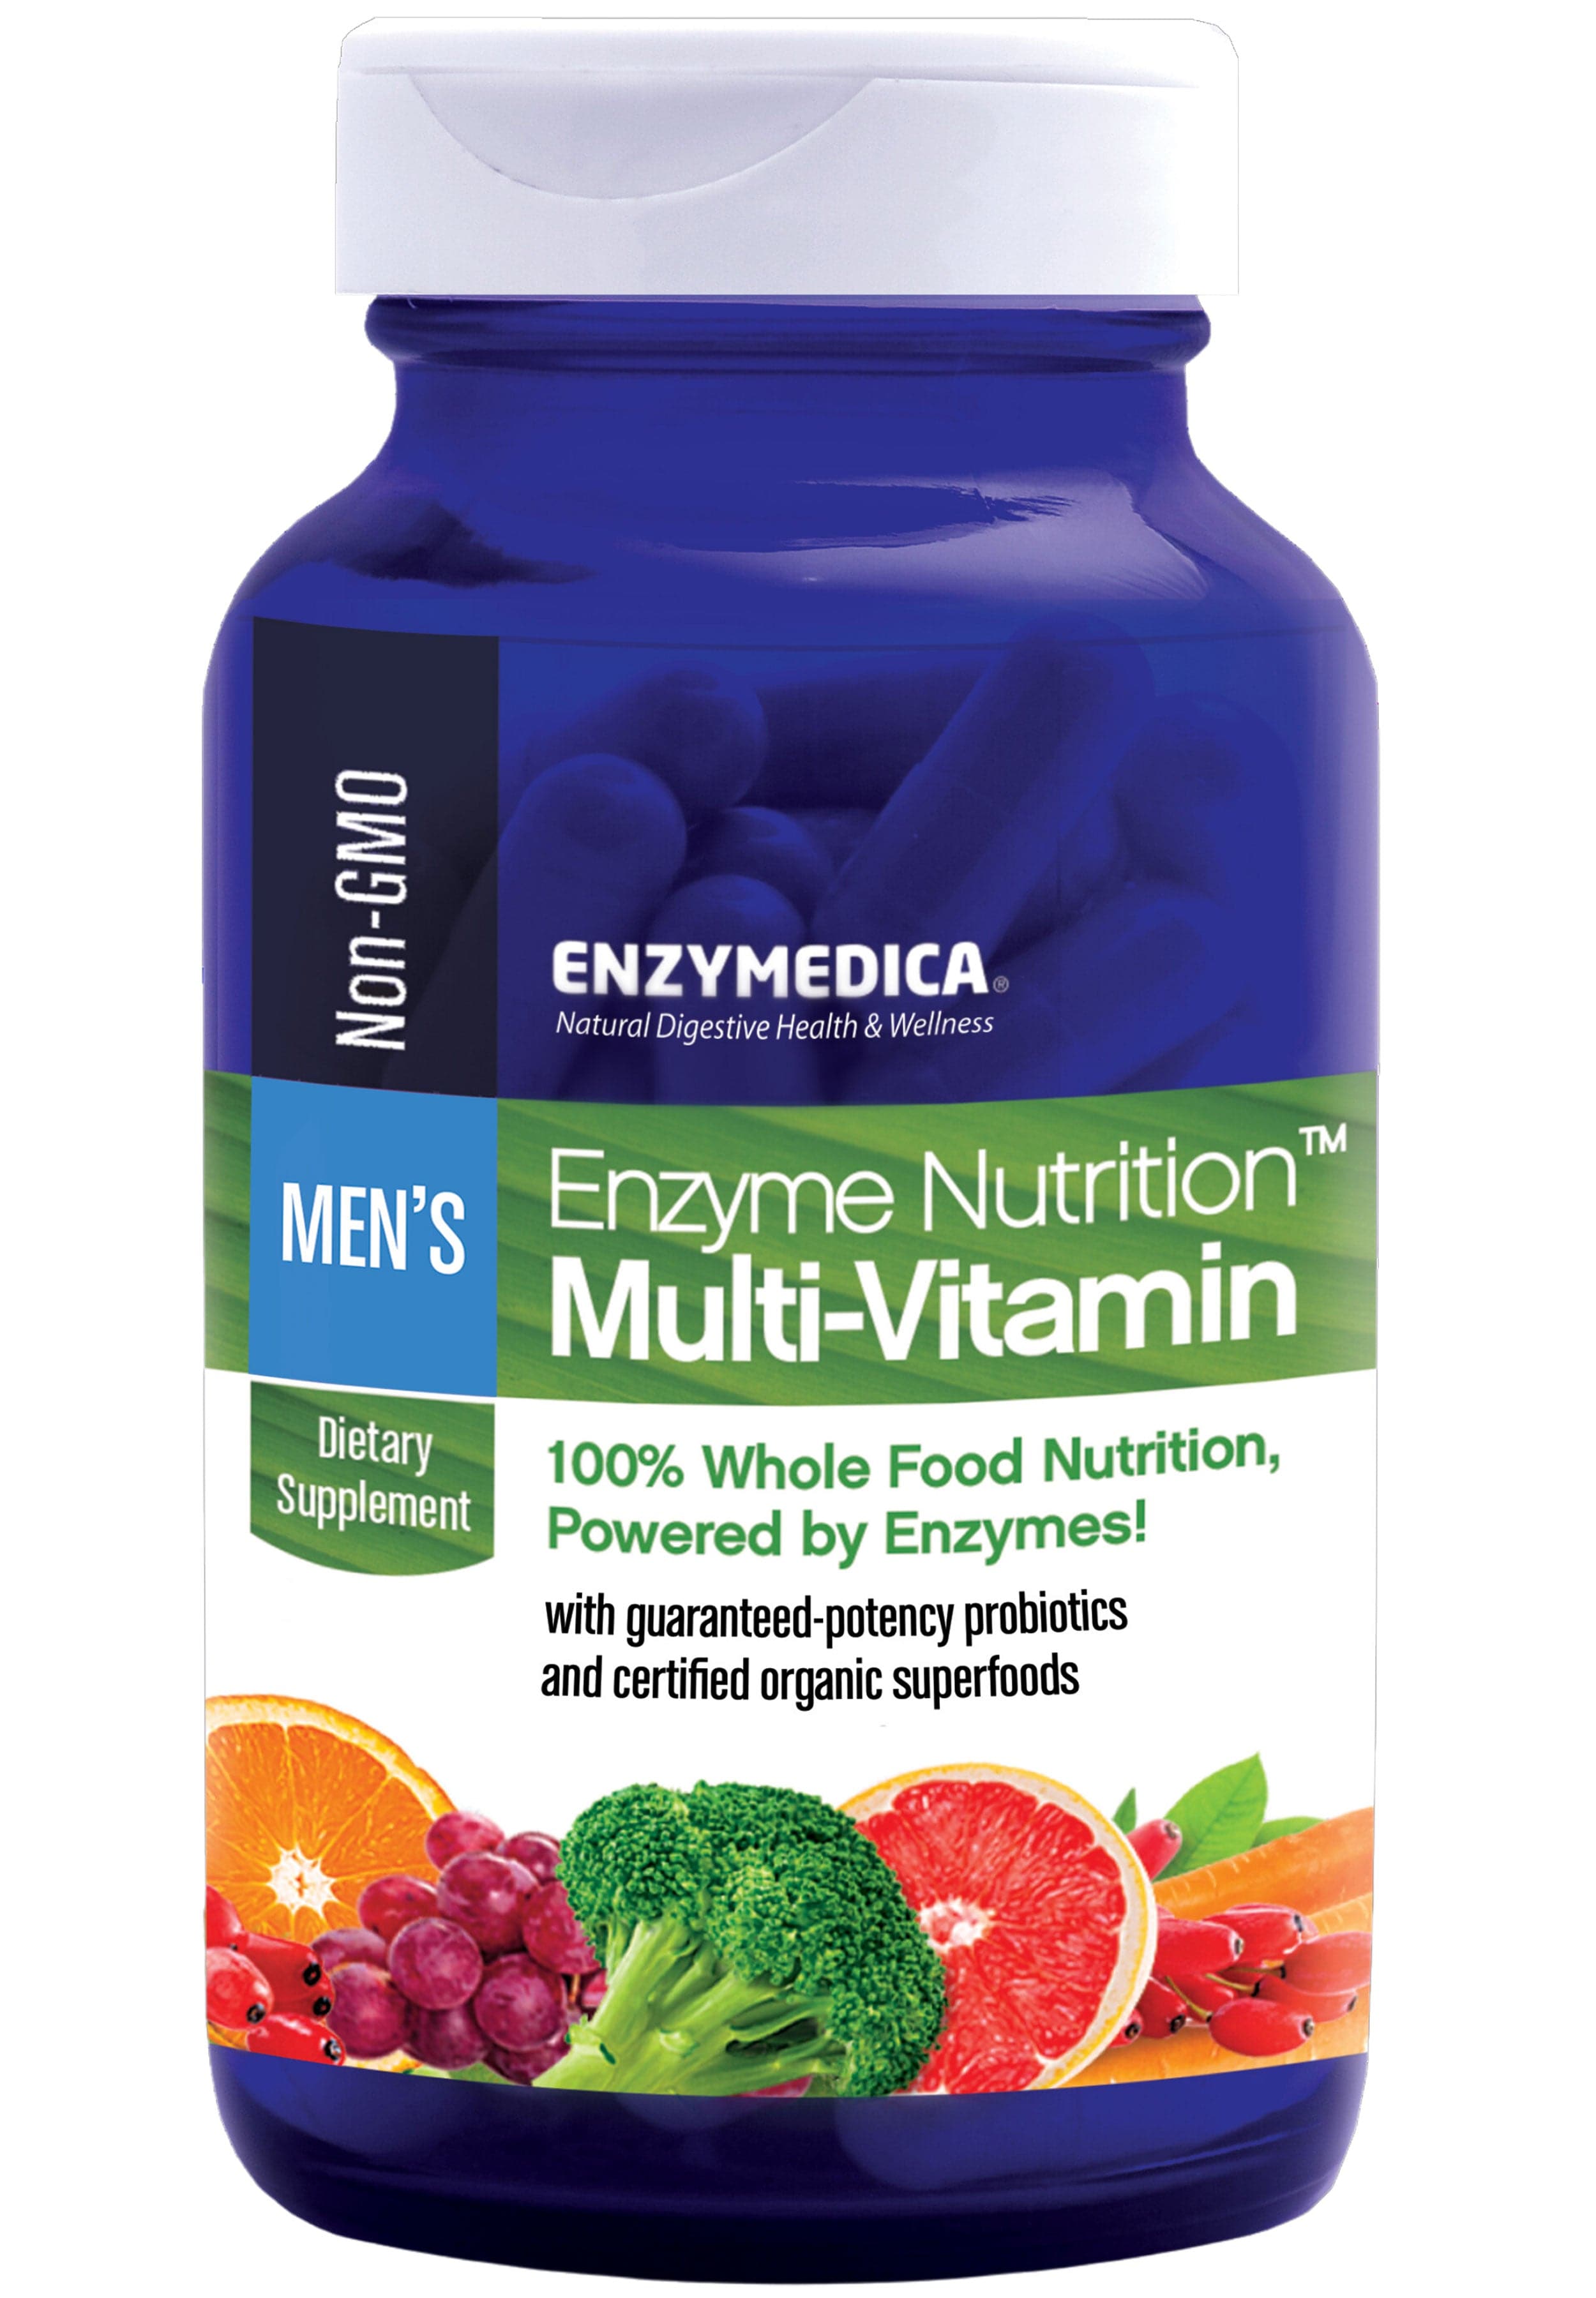 Enzymedica Enzyme Nutrition Multi-Vitamin for Men's